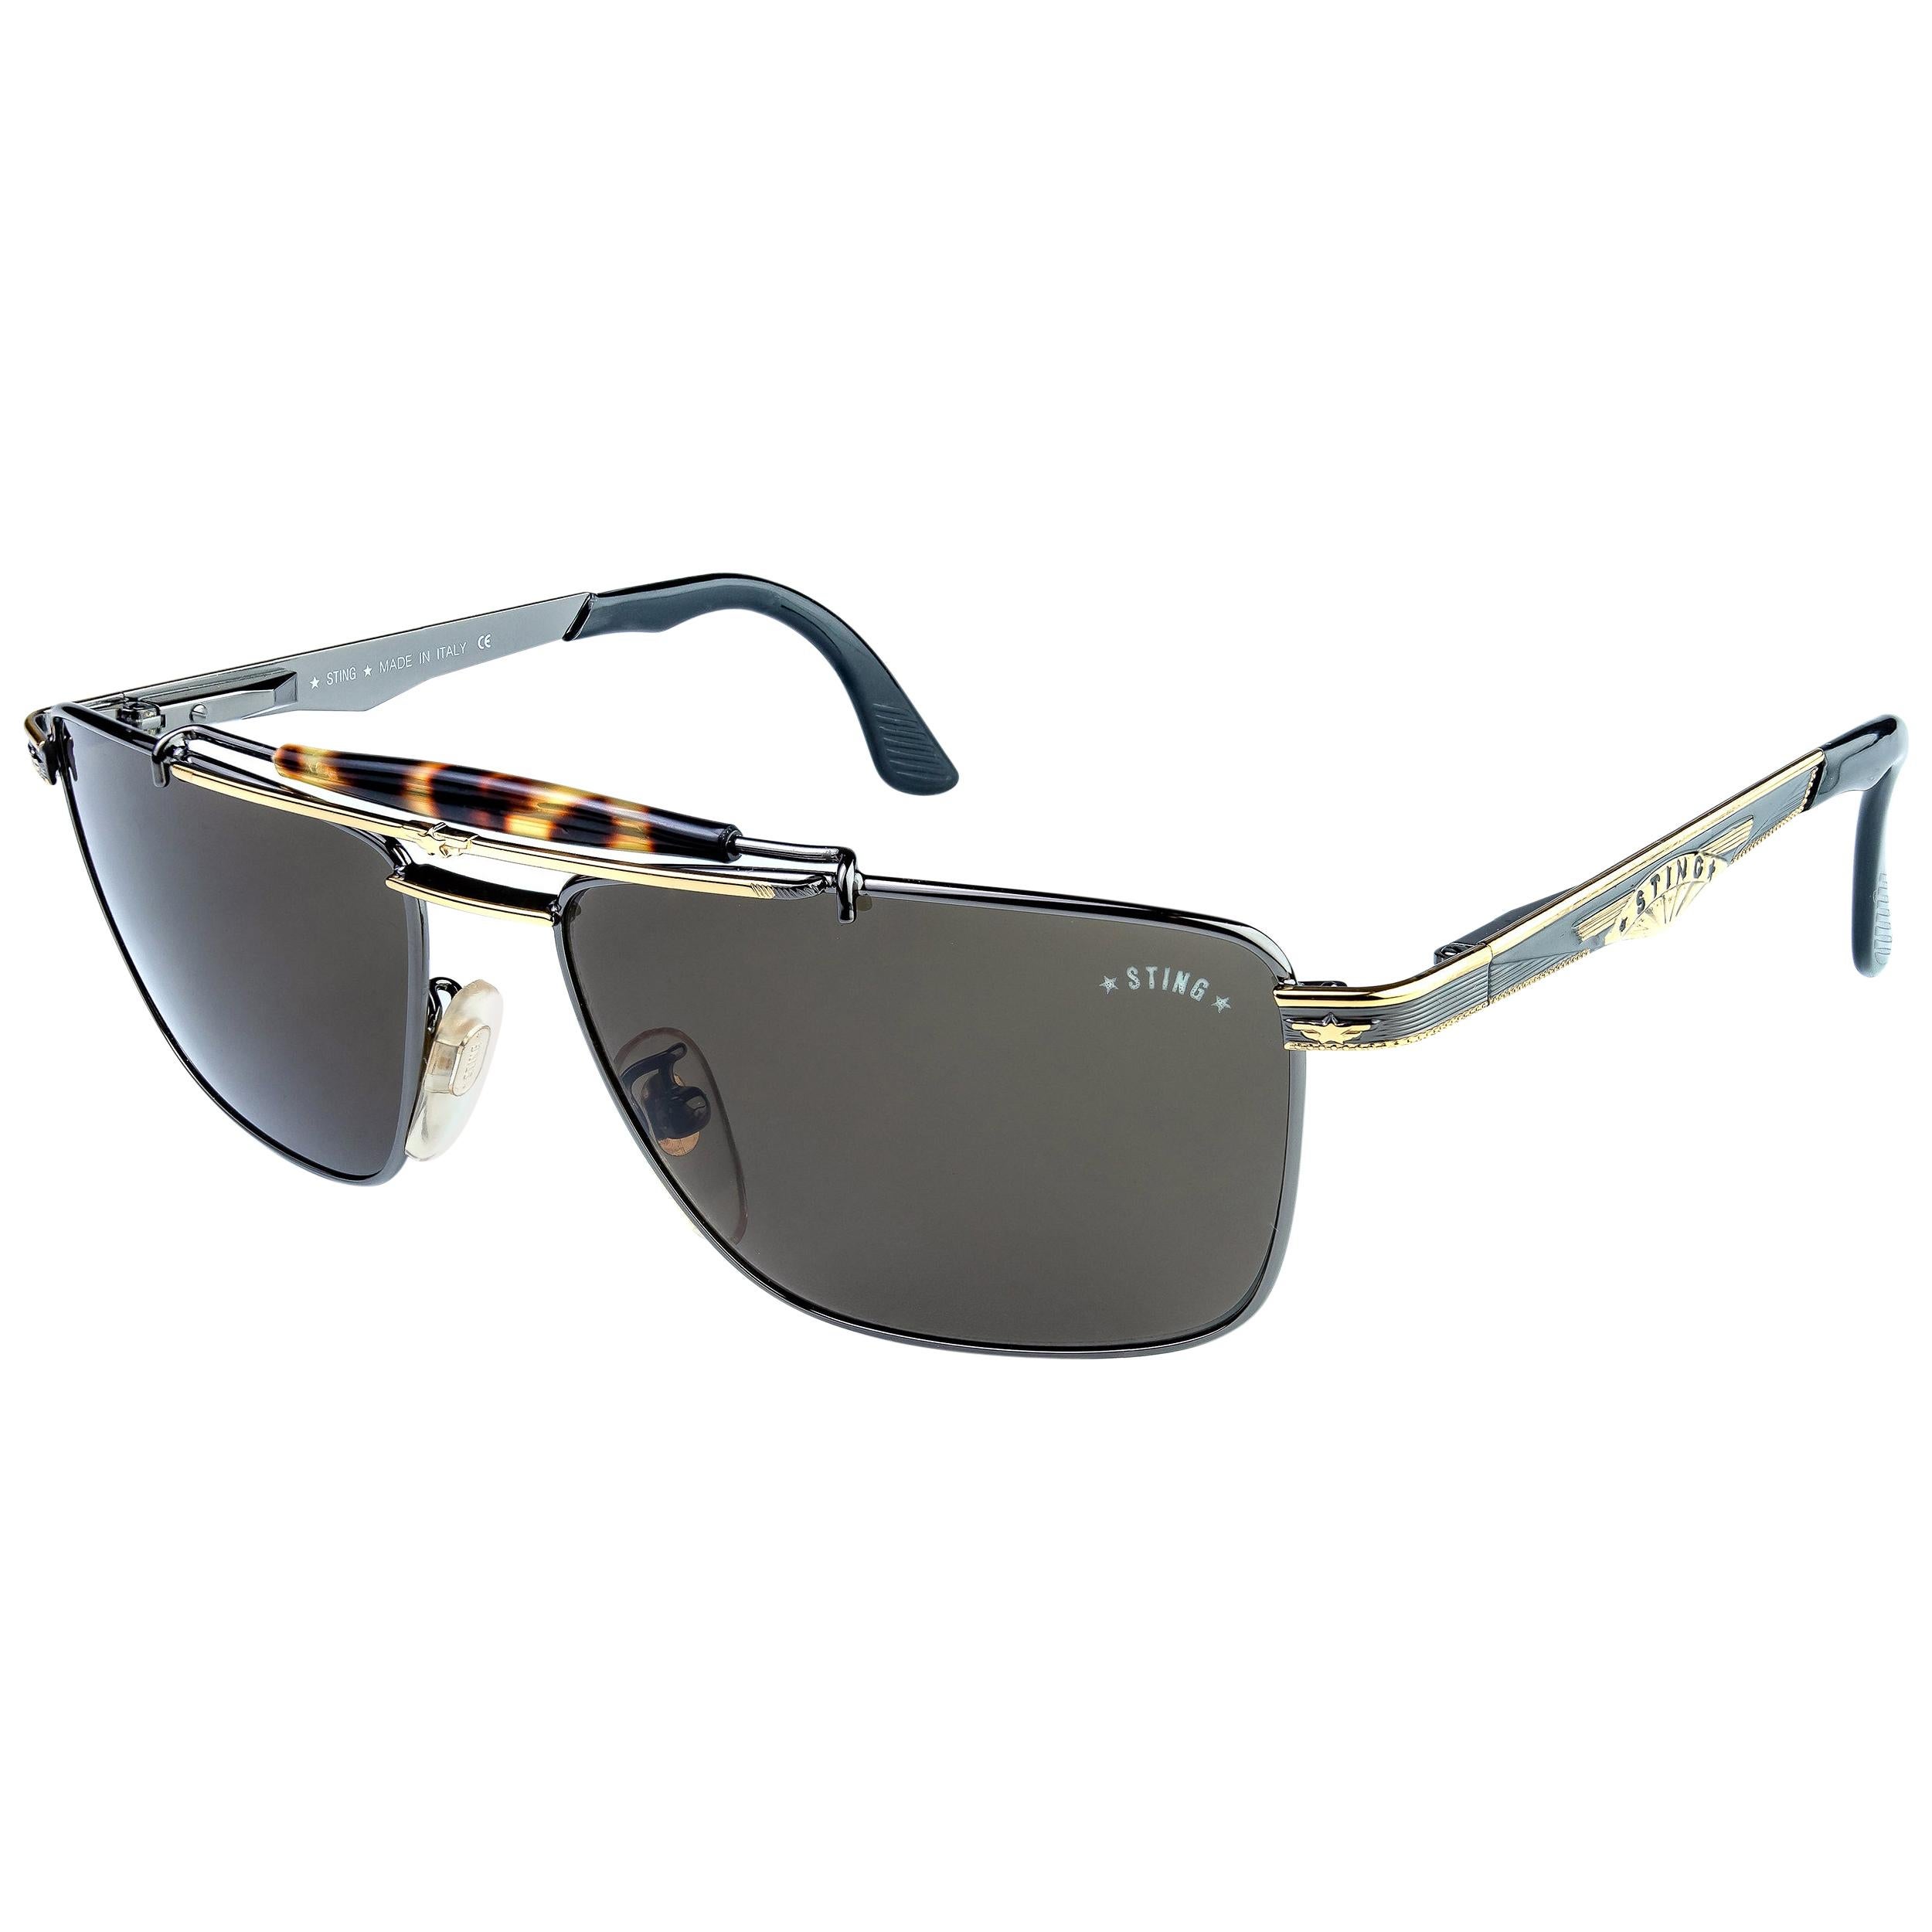 Sting vintage aviator sunglasses For Sale